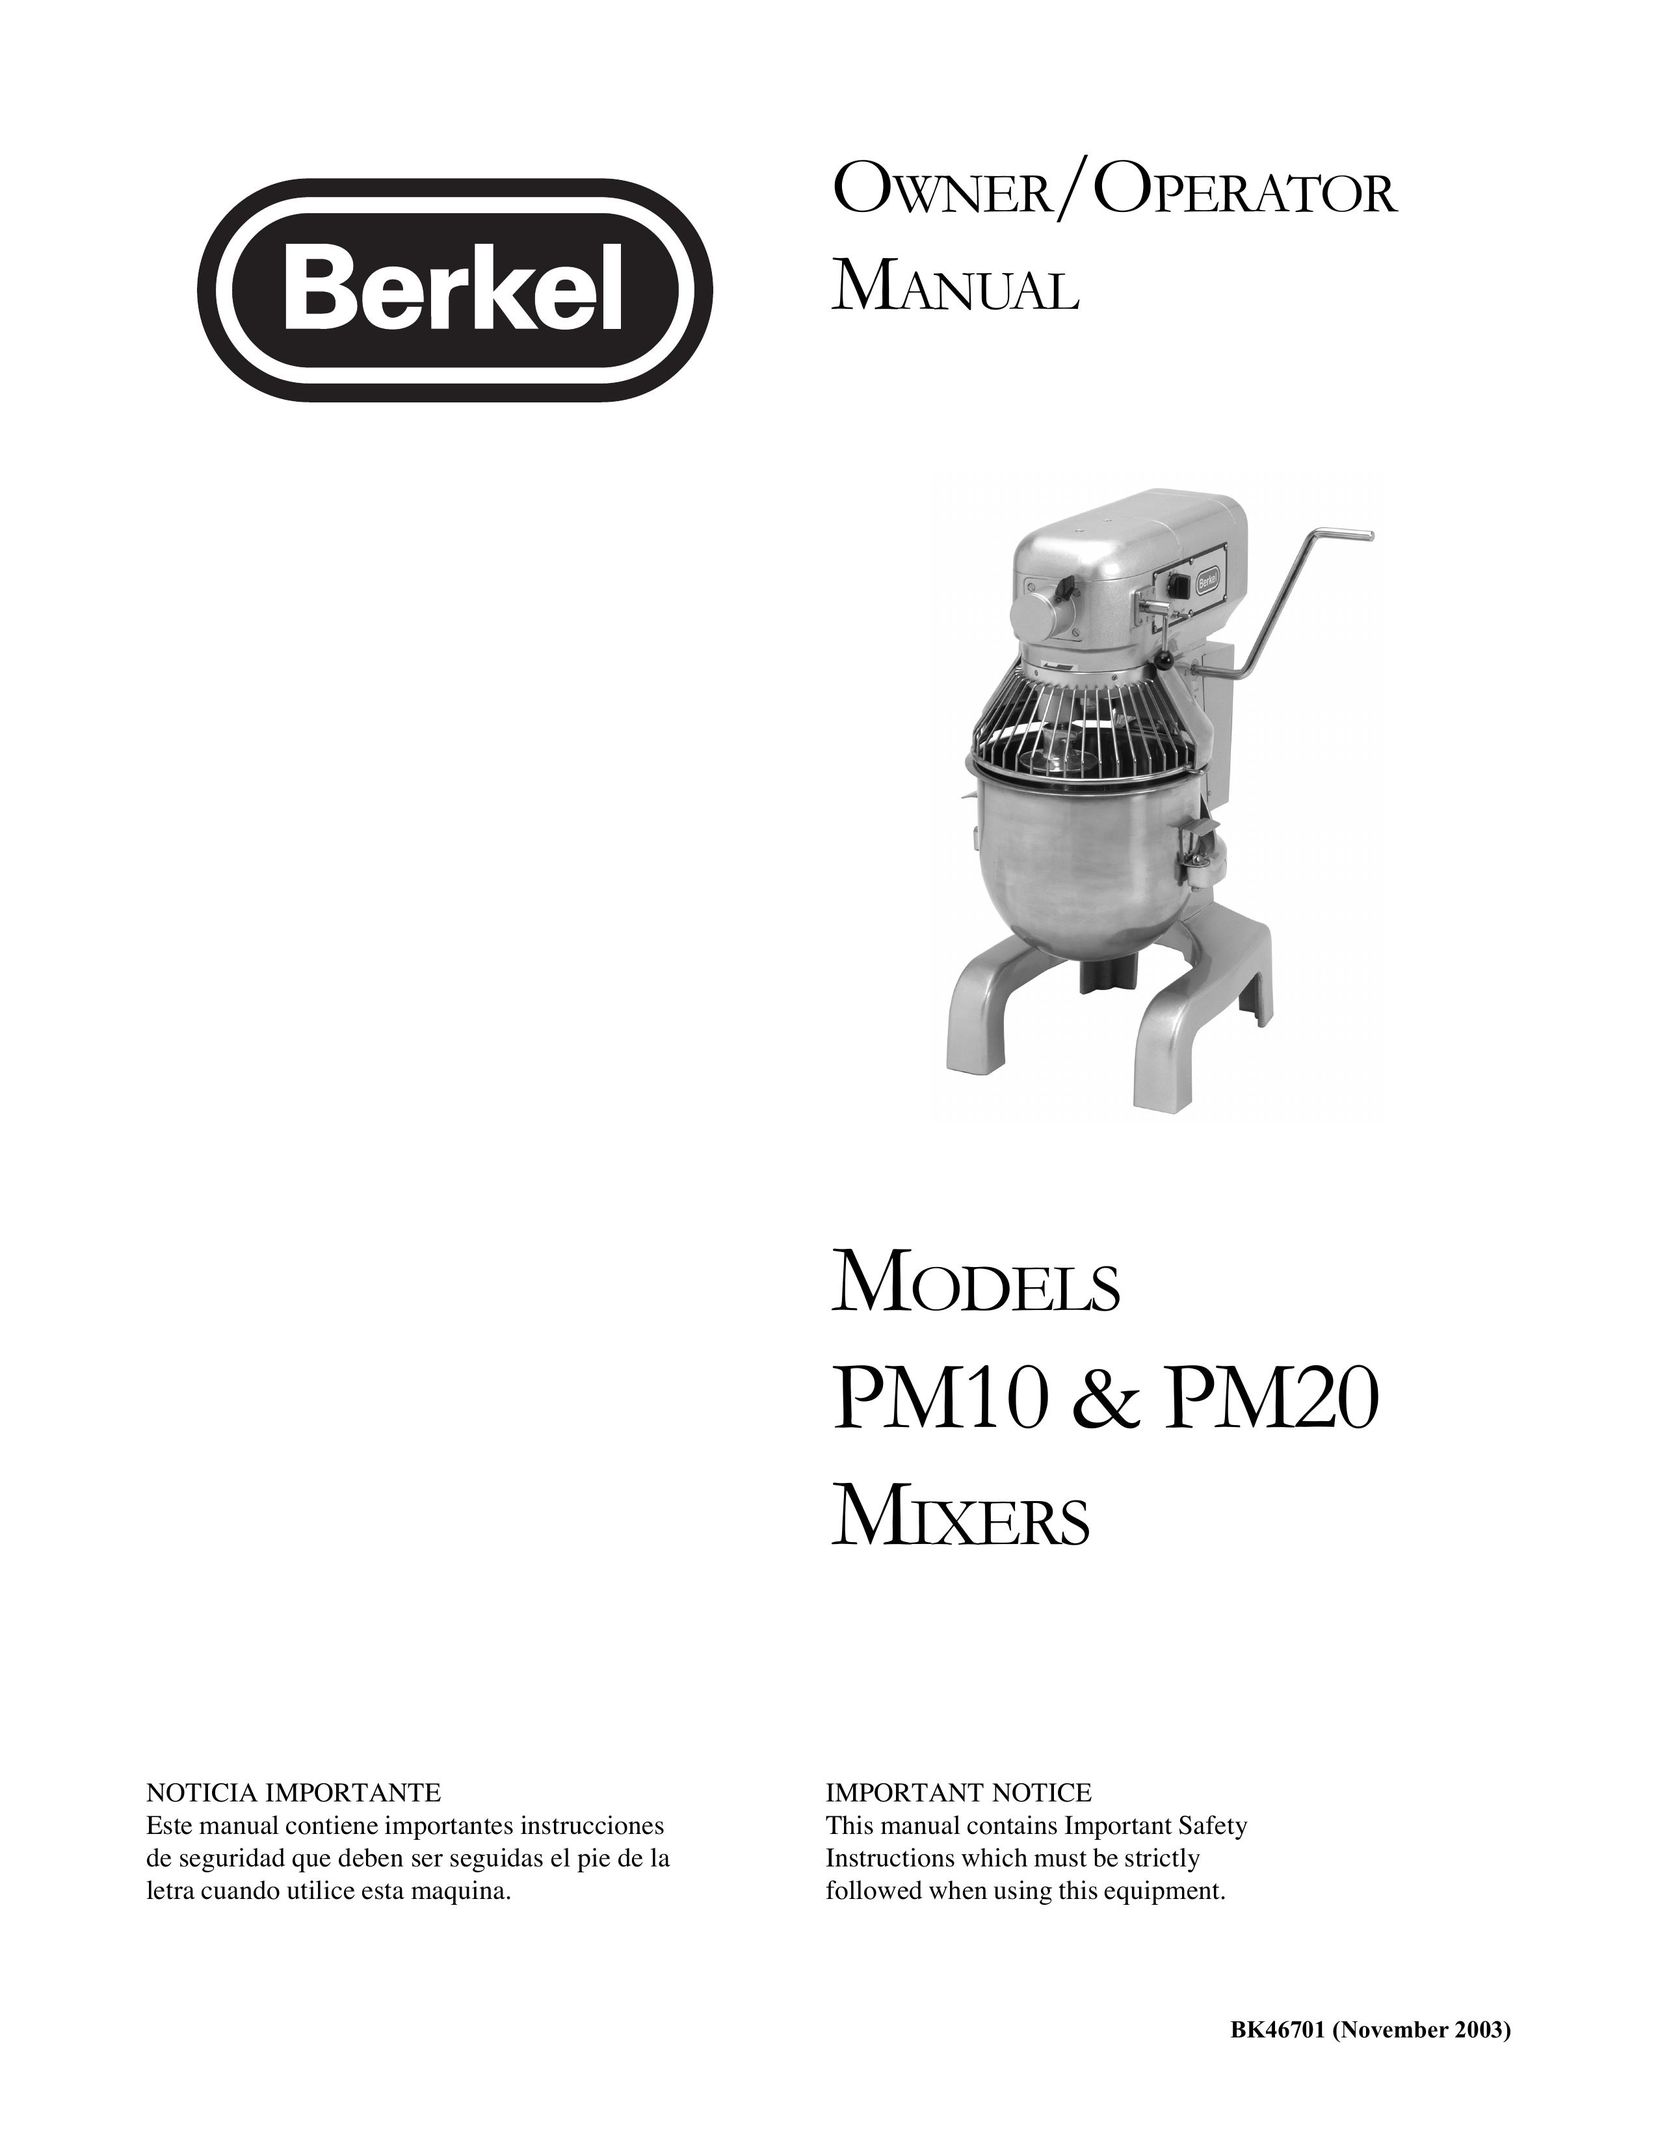 Berkel PM10 Mixer User Manual